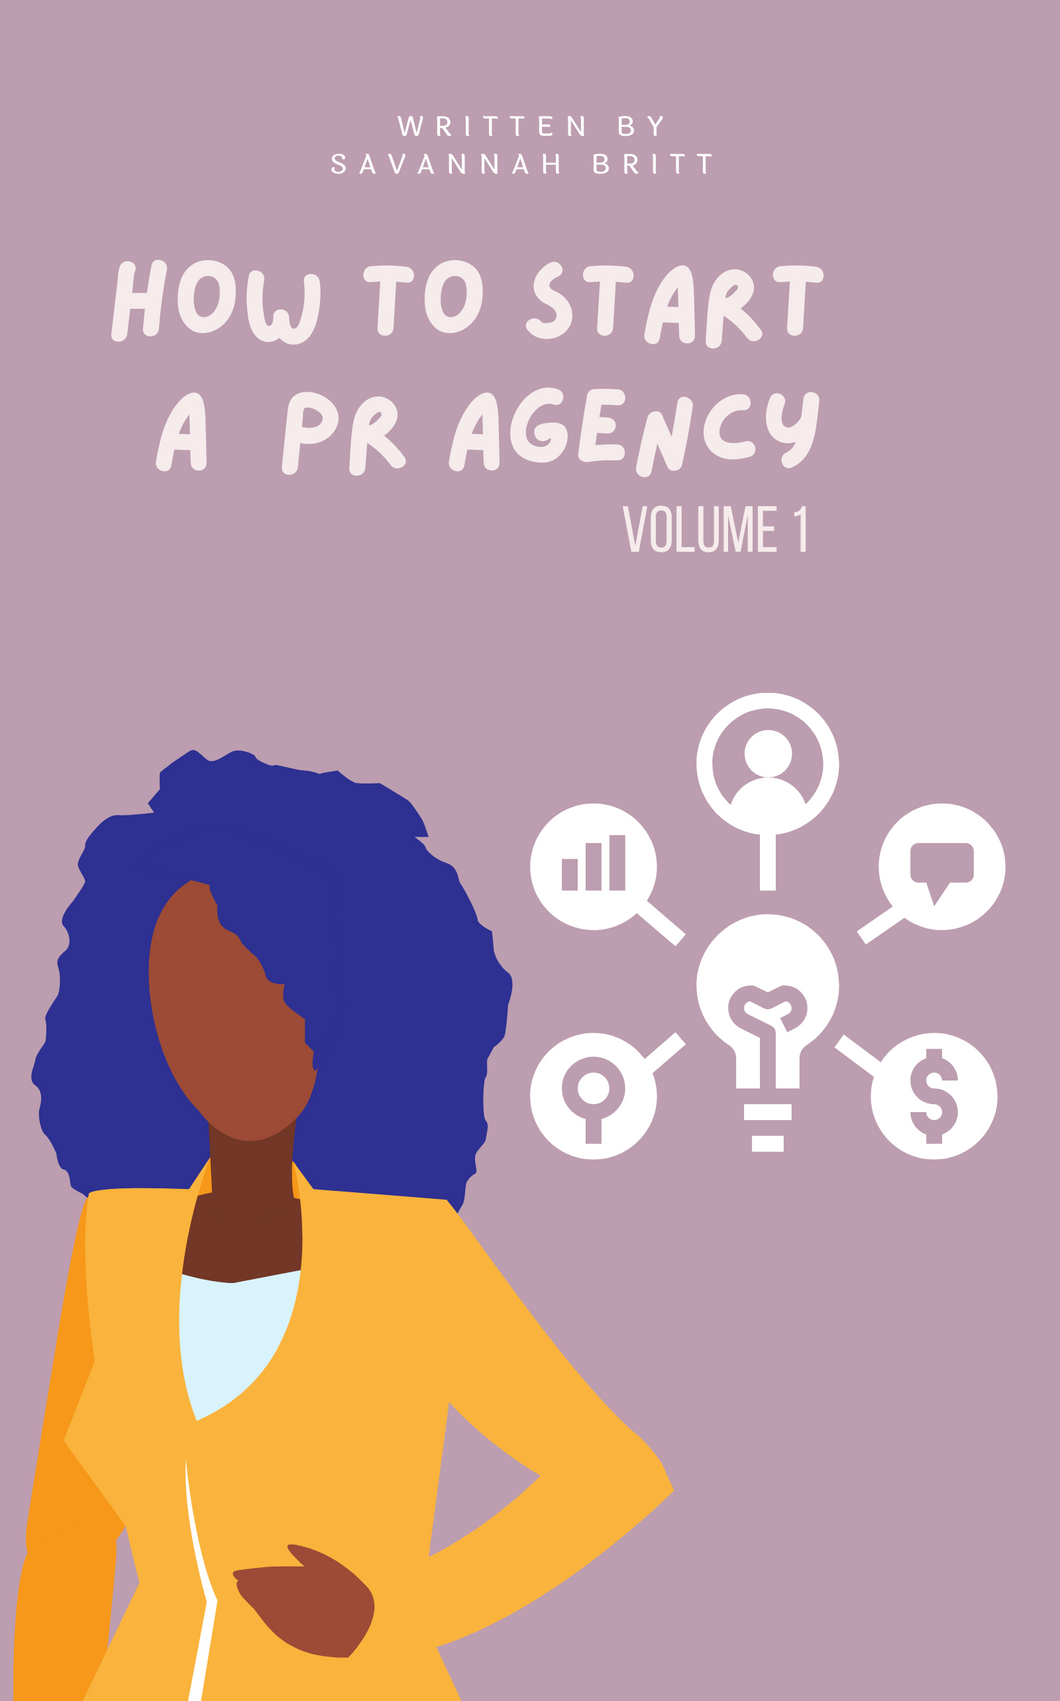 How To Start a PR Agency Vol. 1 by Savannah Britt